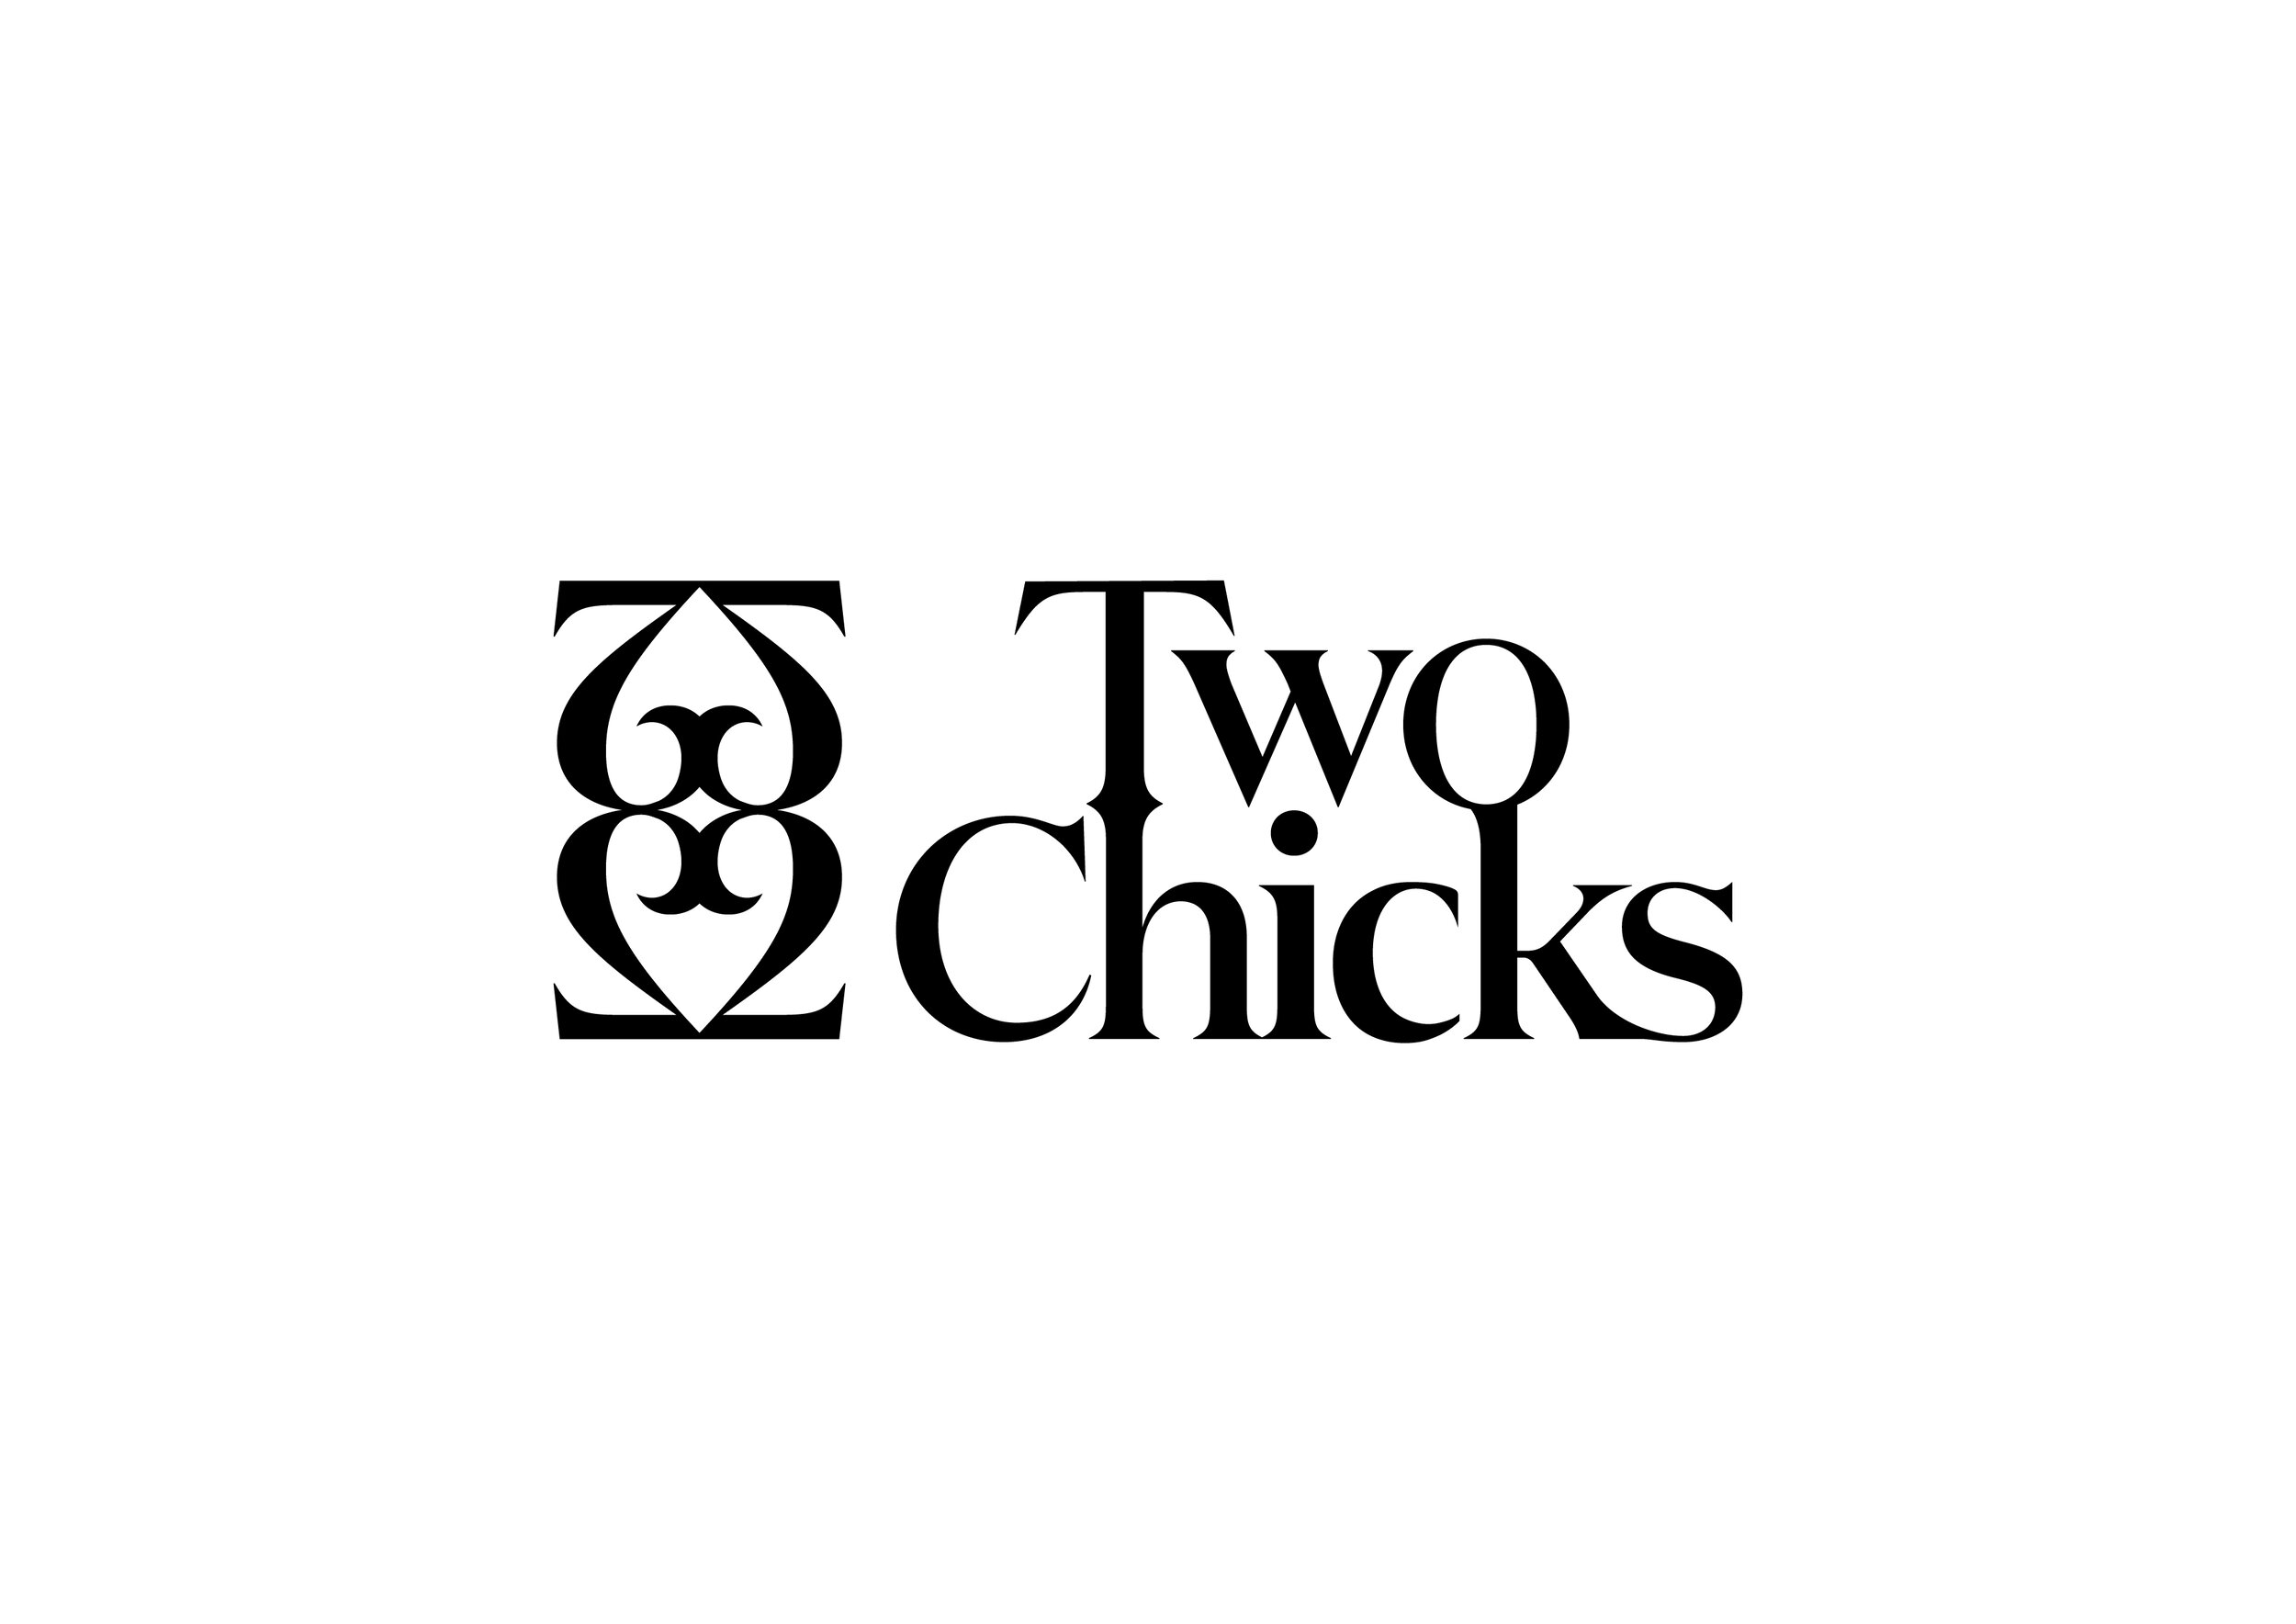 TWO CHICKS - In Line LockUp - Black (3).jpg